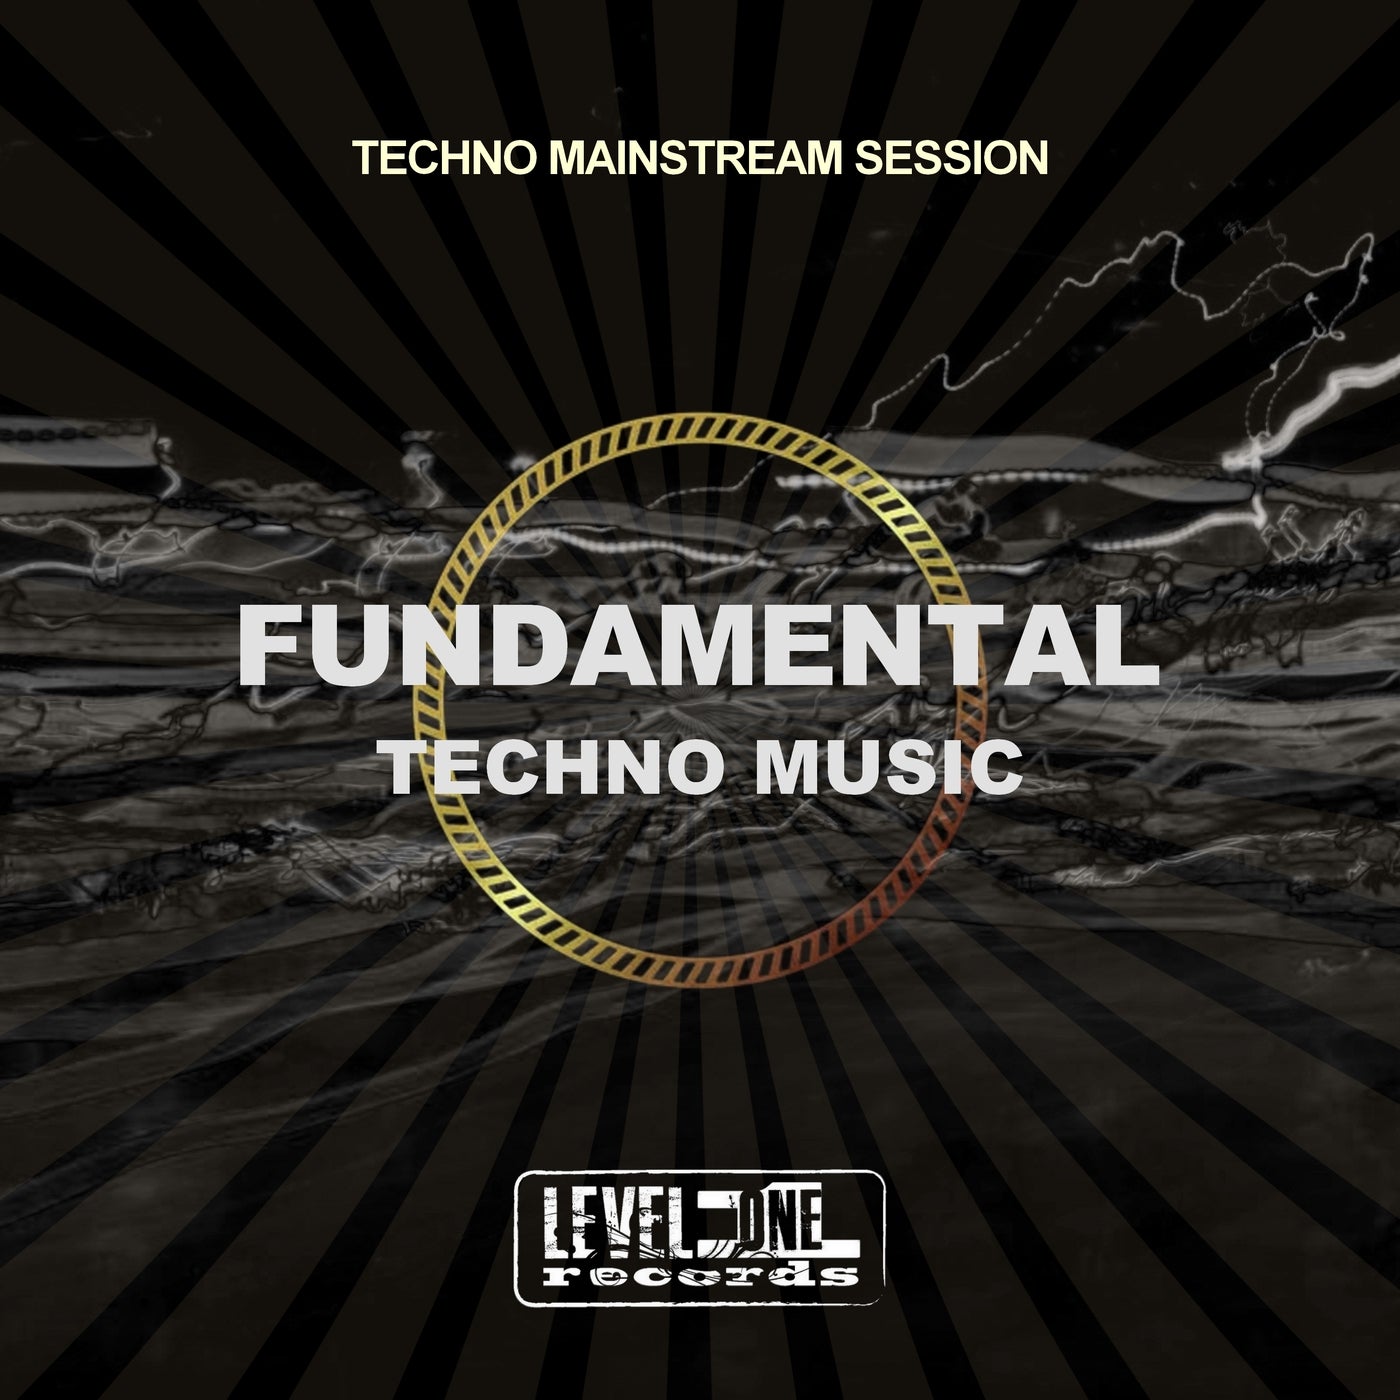 Alex Patane', Canosa - Fundamental Techno Music (Techno Mainstream Session) [Level One Records]